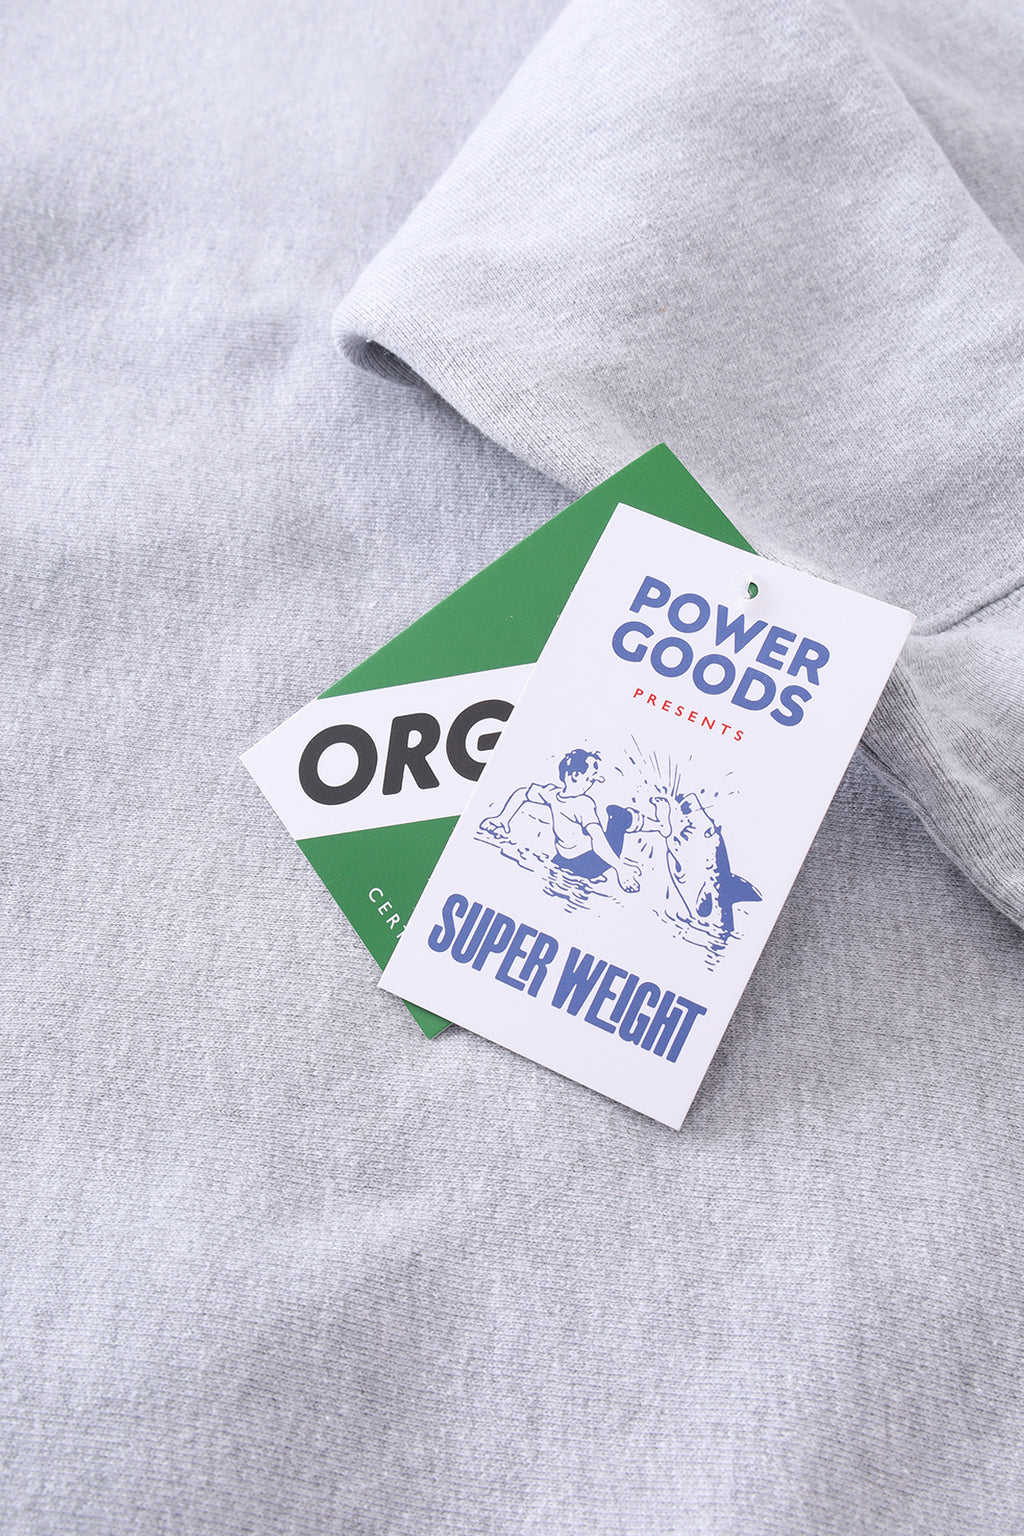 Power Goods - Super Weight Crewneck - Heather Grey